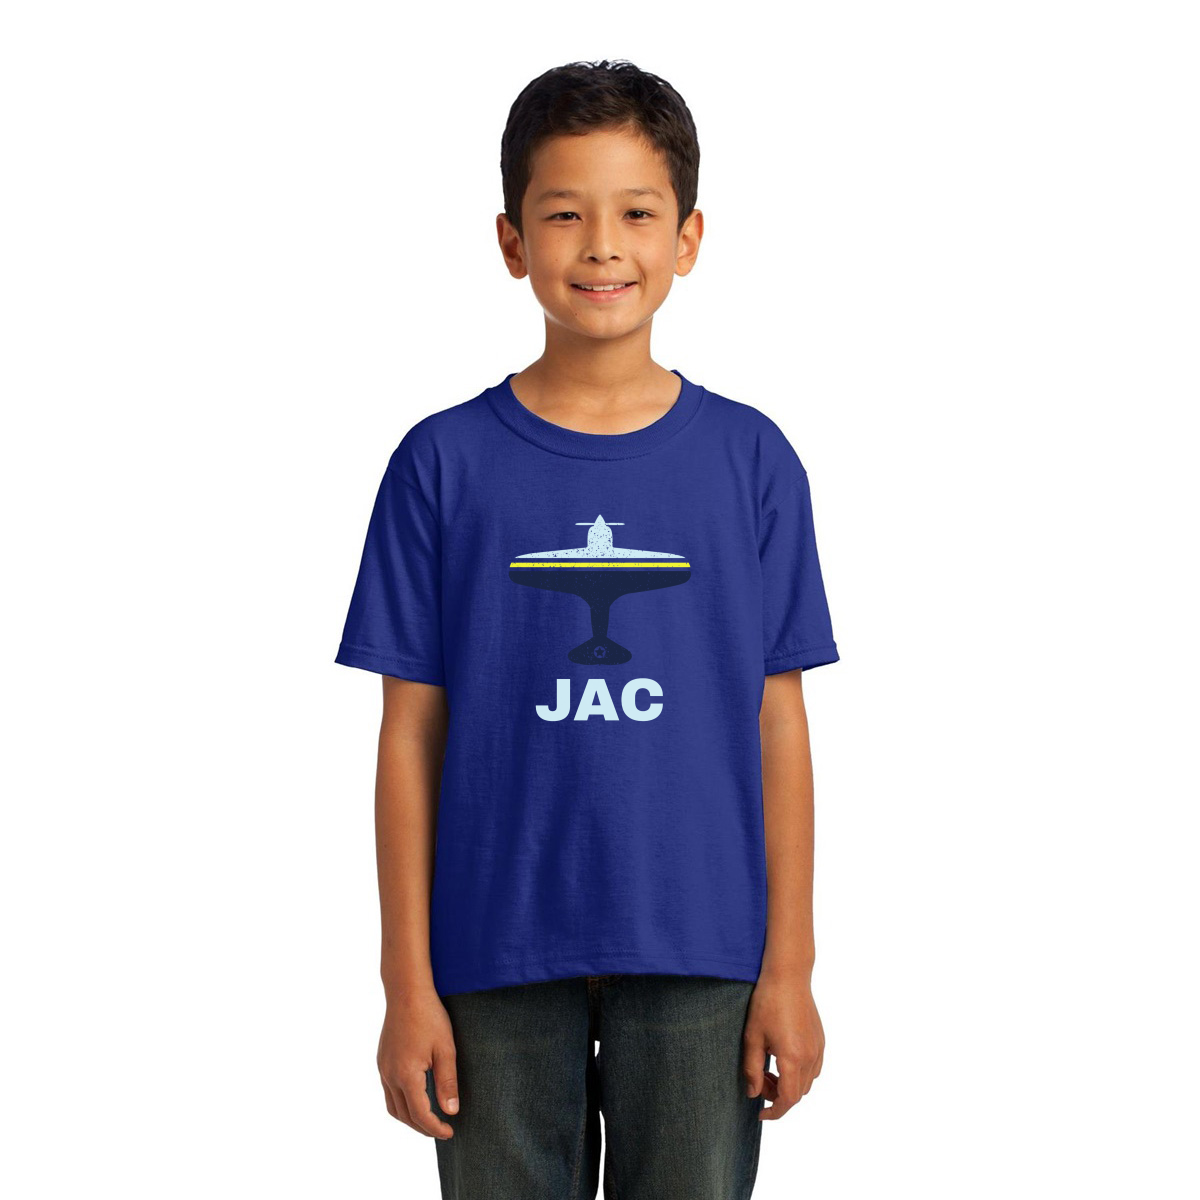 Fly Jackson Hole JAC Airport Kids T-shirt | Blue